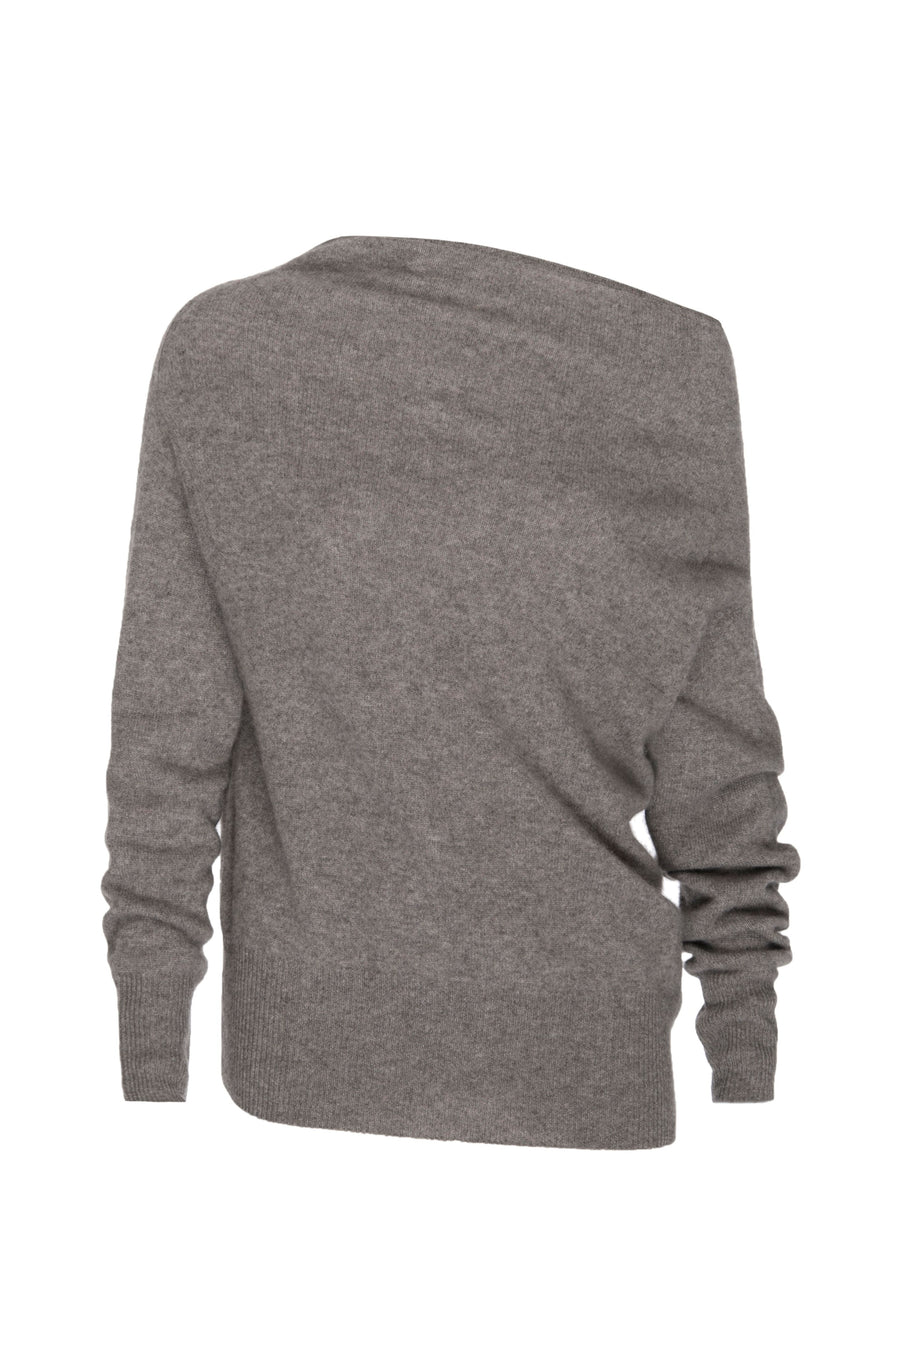 Lori cashmere off shoulder grey sweater flat view